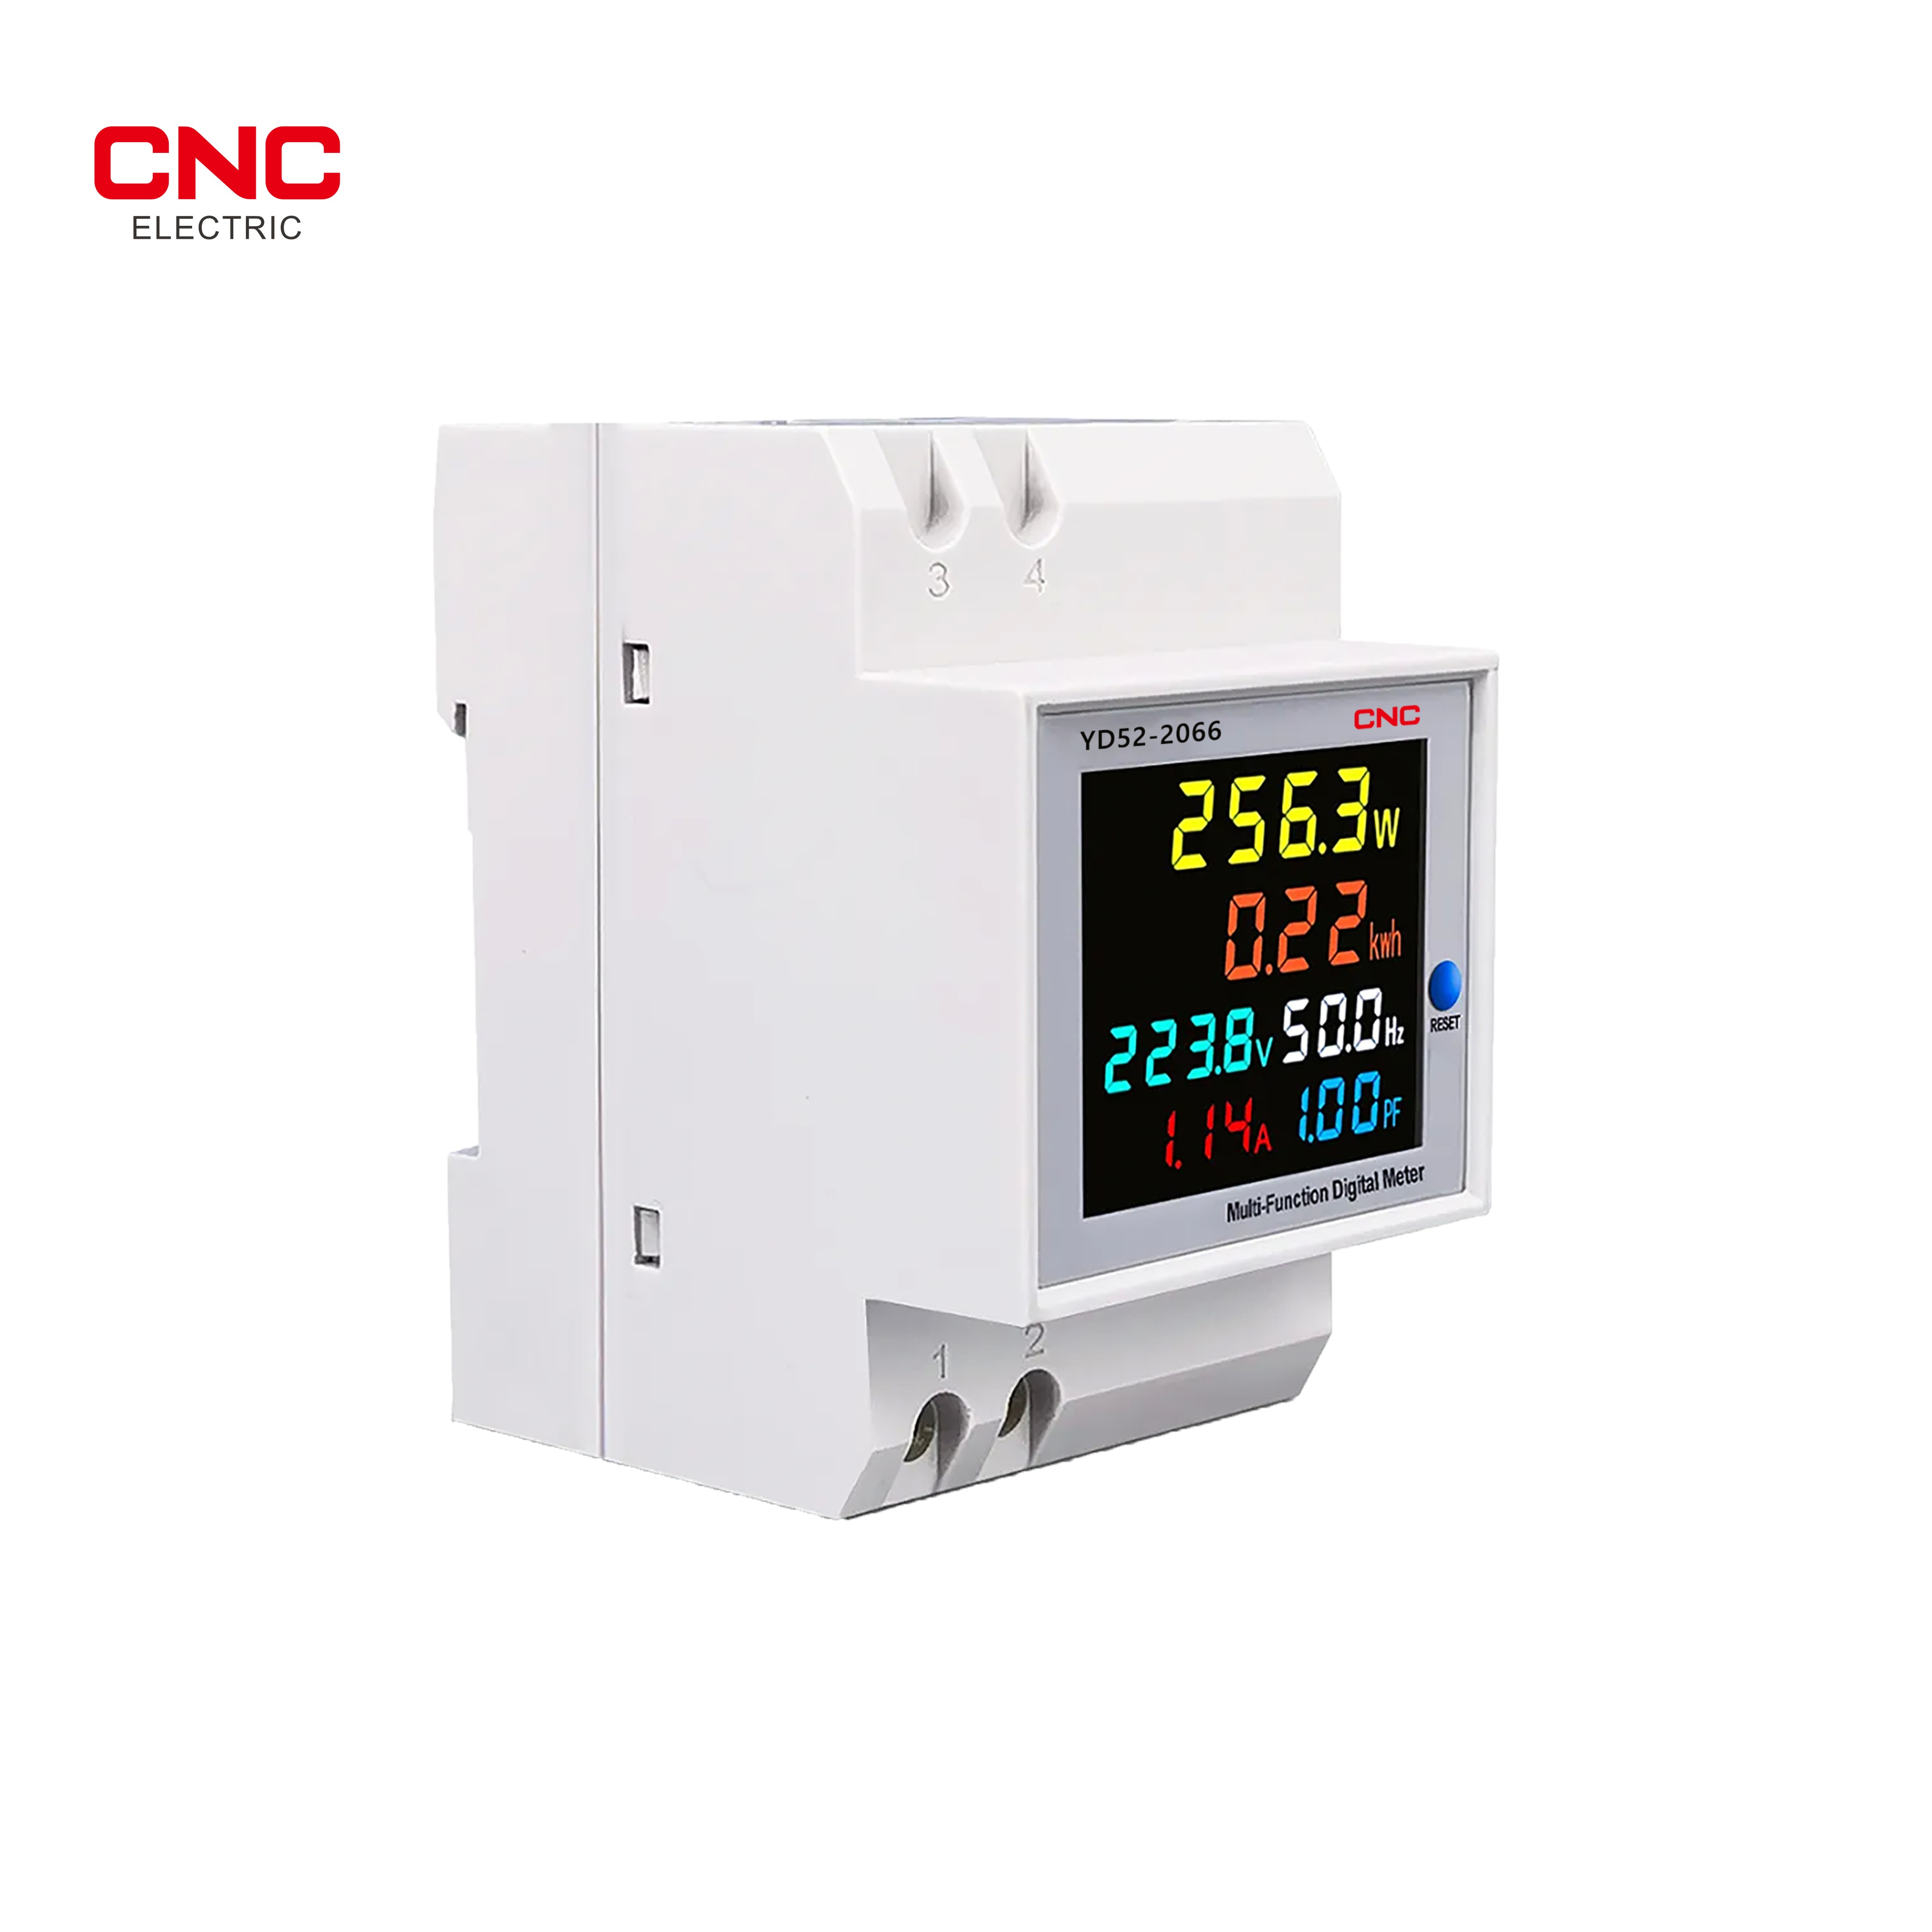 CNC | Multi-function Digital Meter